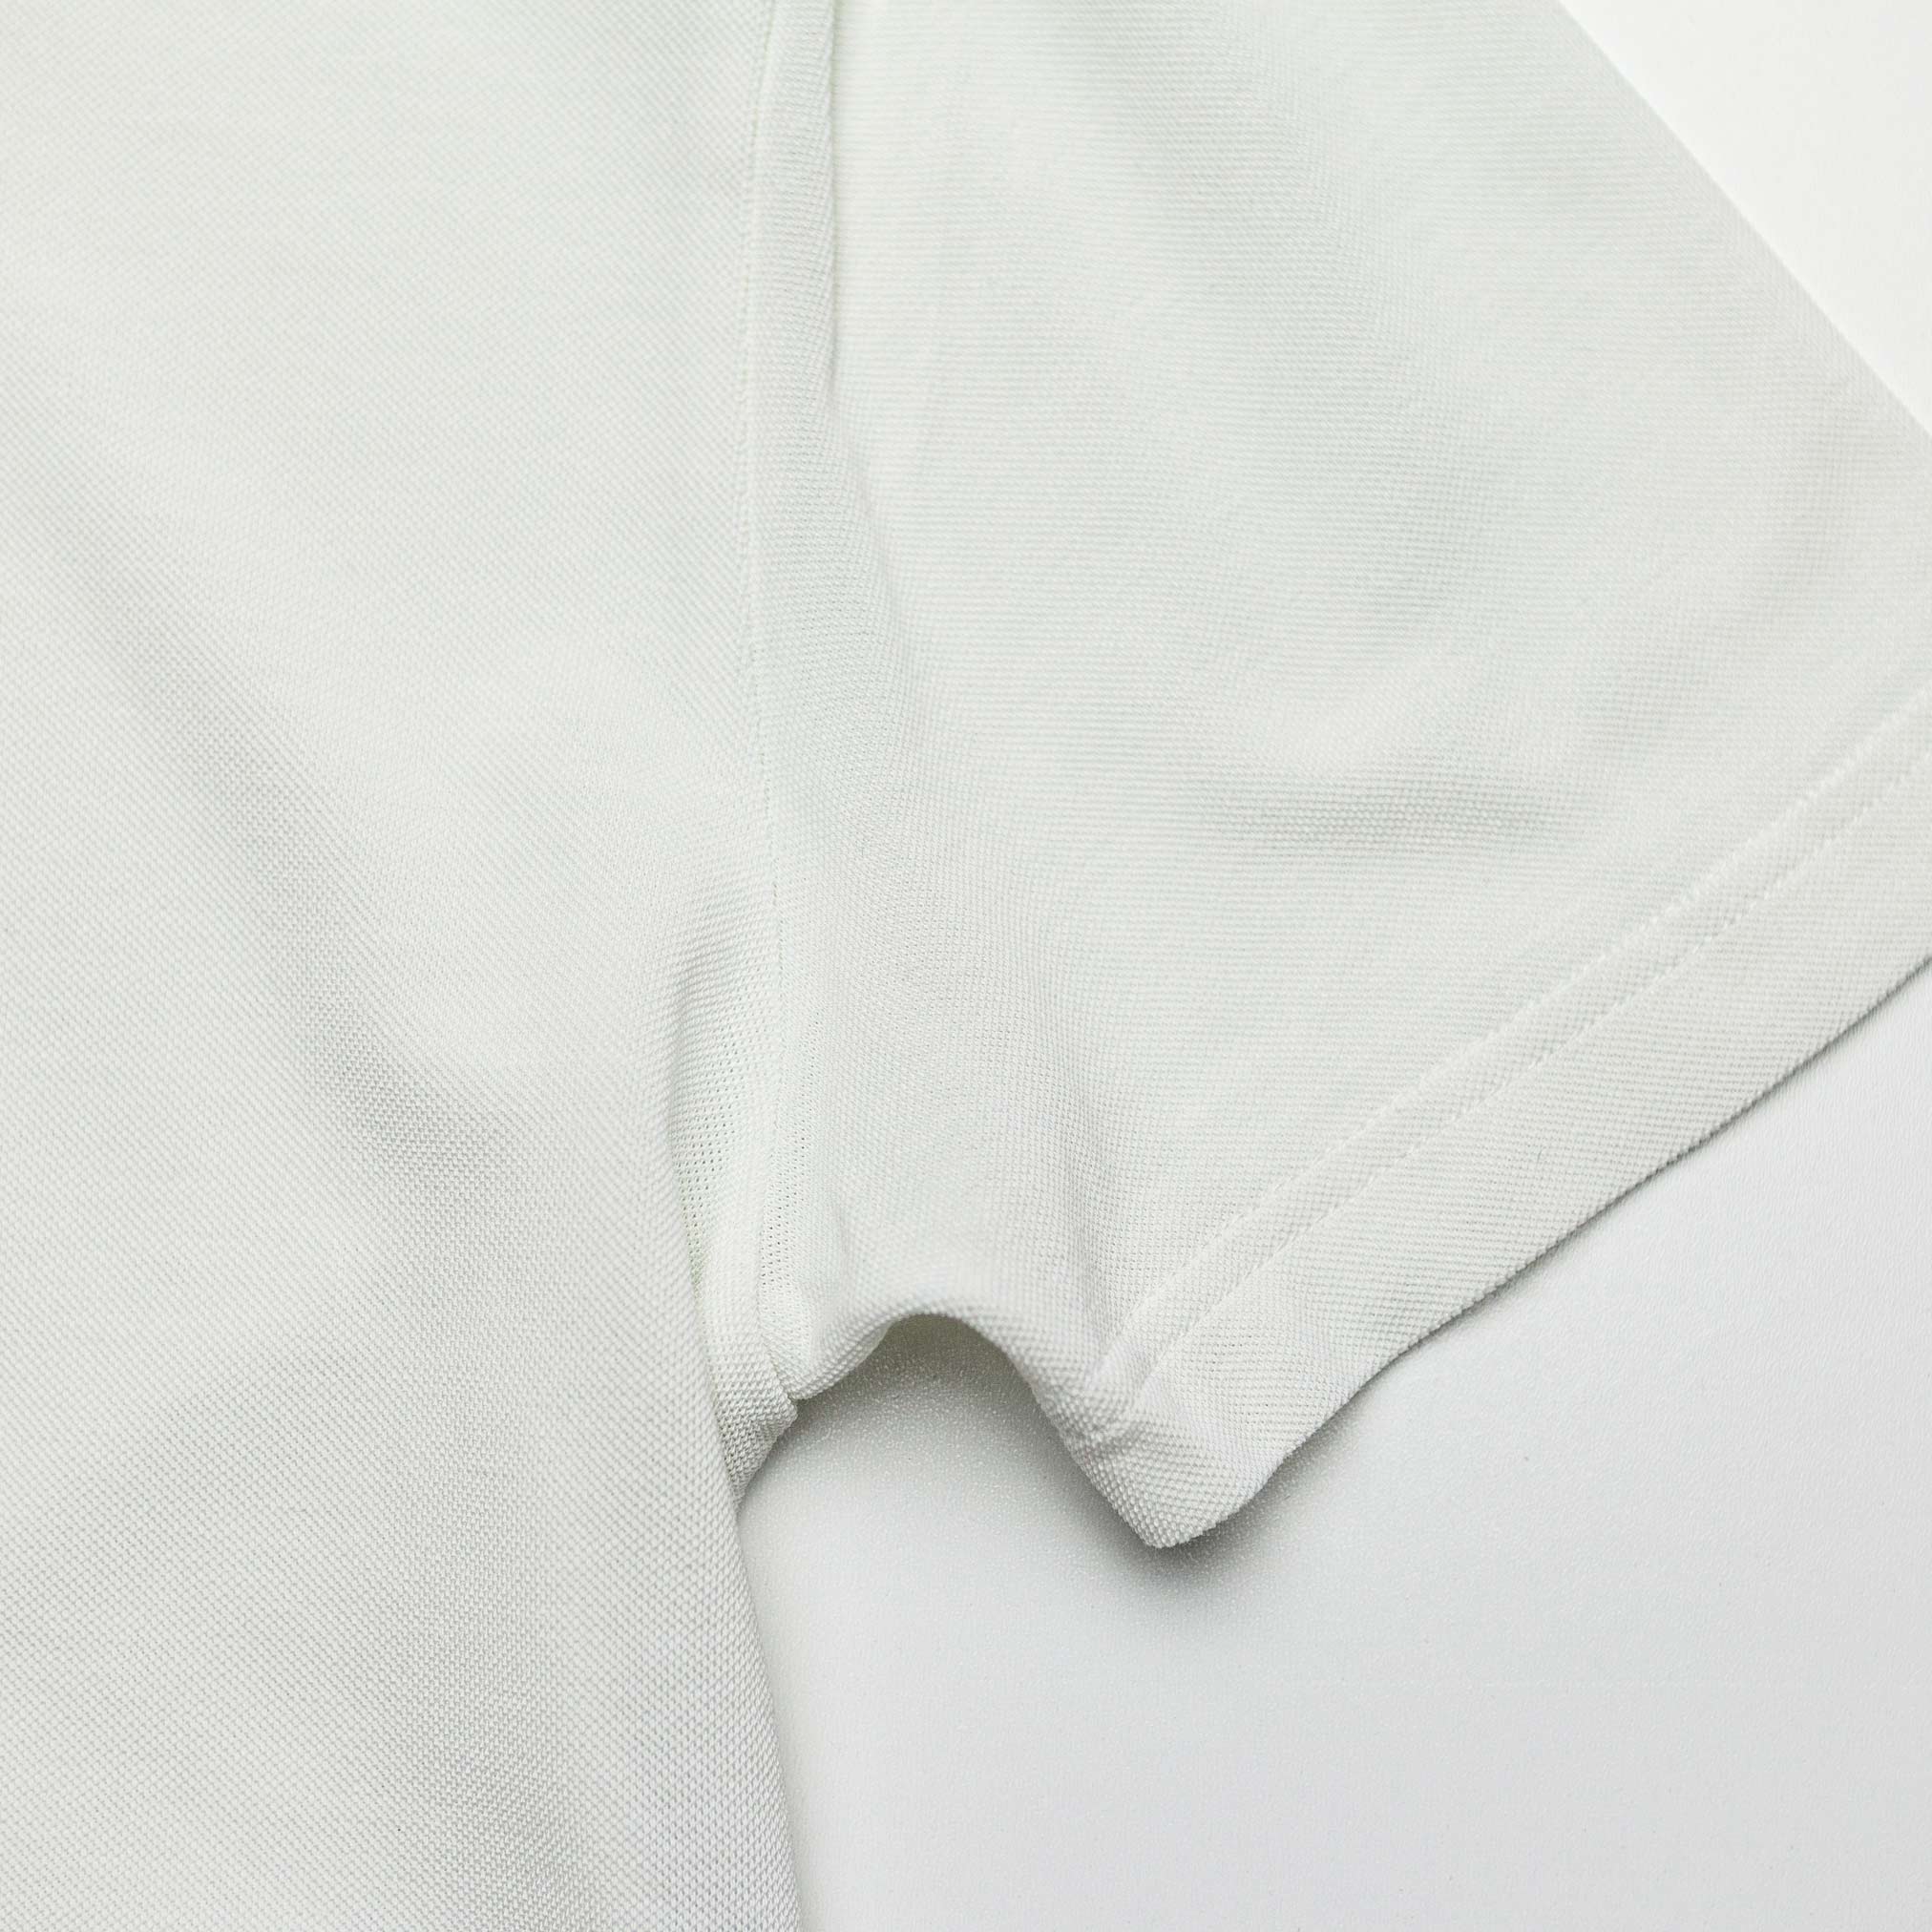 White Polo Shirt - 48